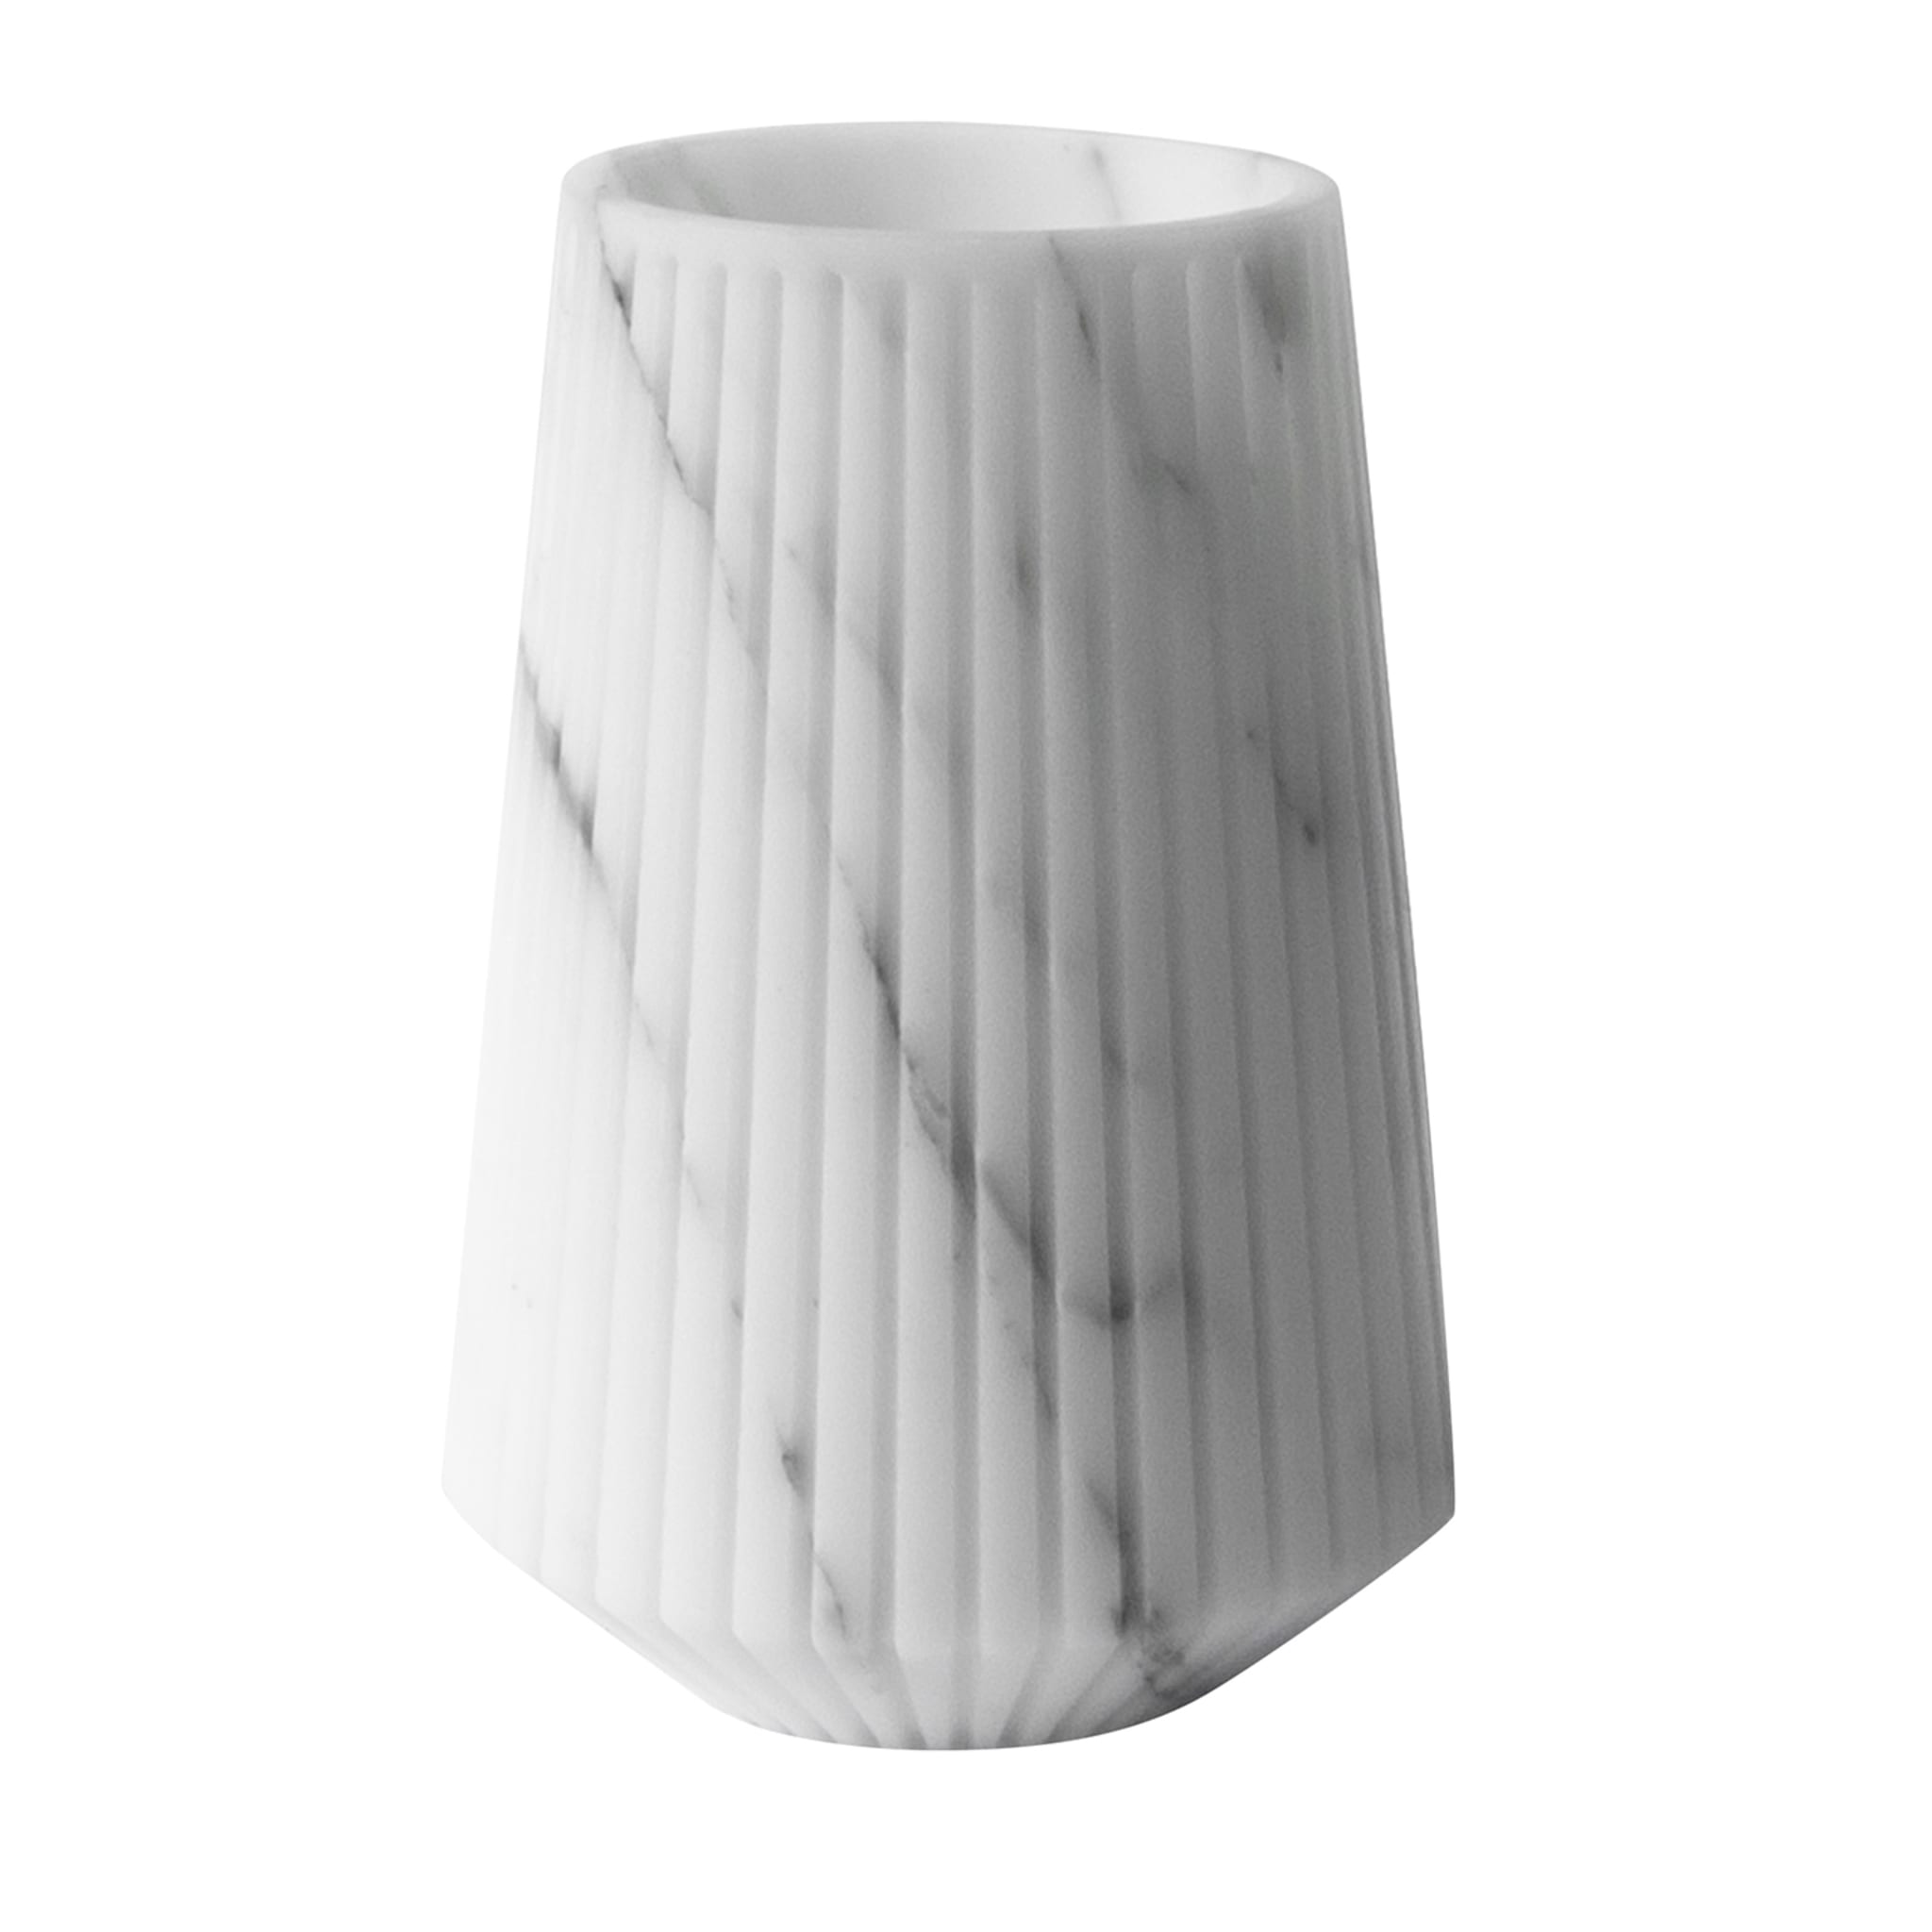 Striped Medium Vase in white Carrara marble - Main view